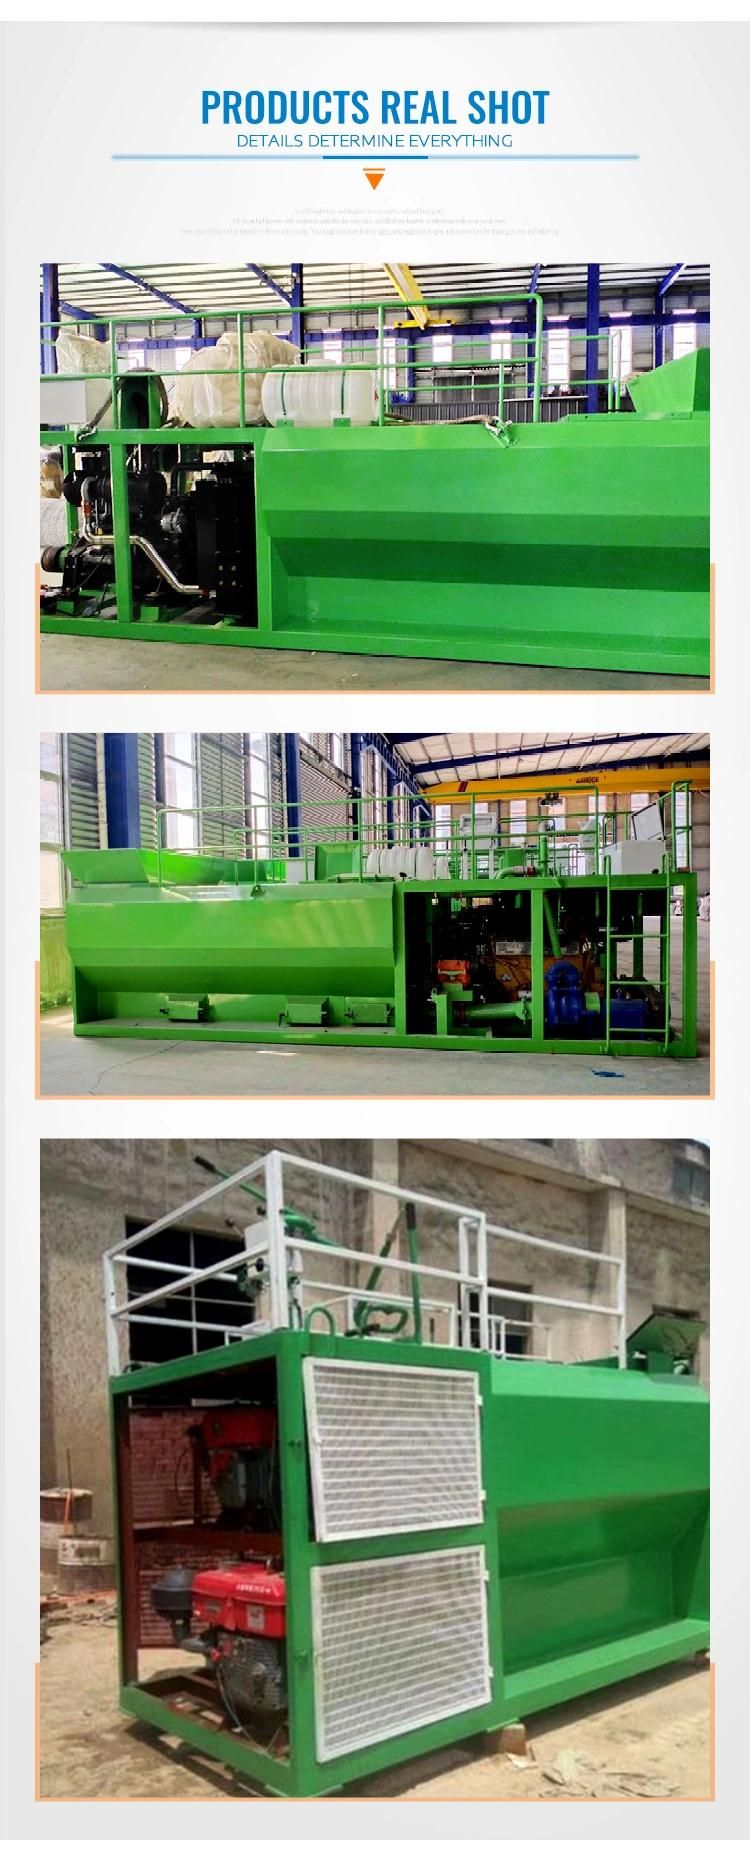 3000L Hydroseeding Machine for Spraying Grass Seeds Hydroseeding Equipment